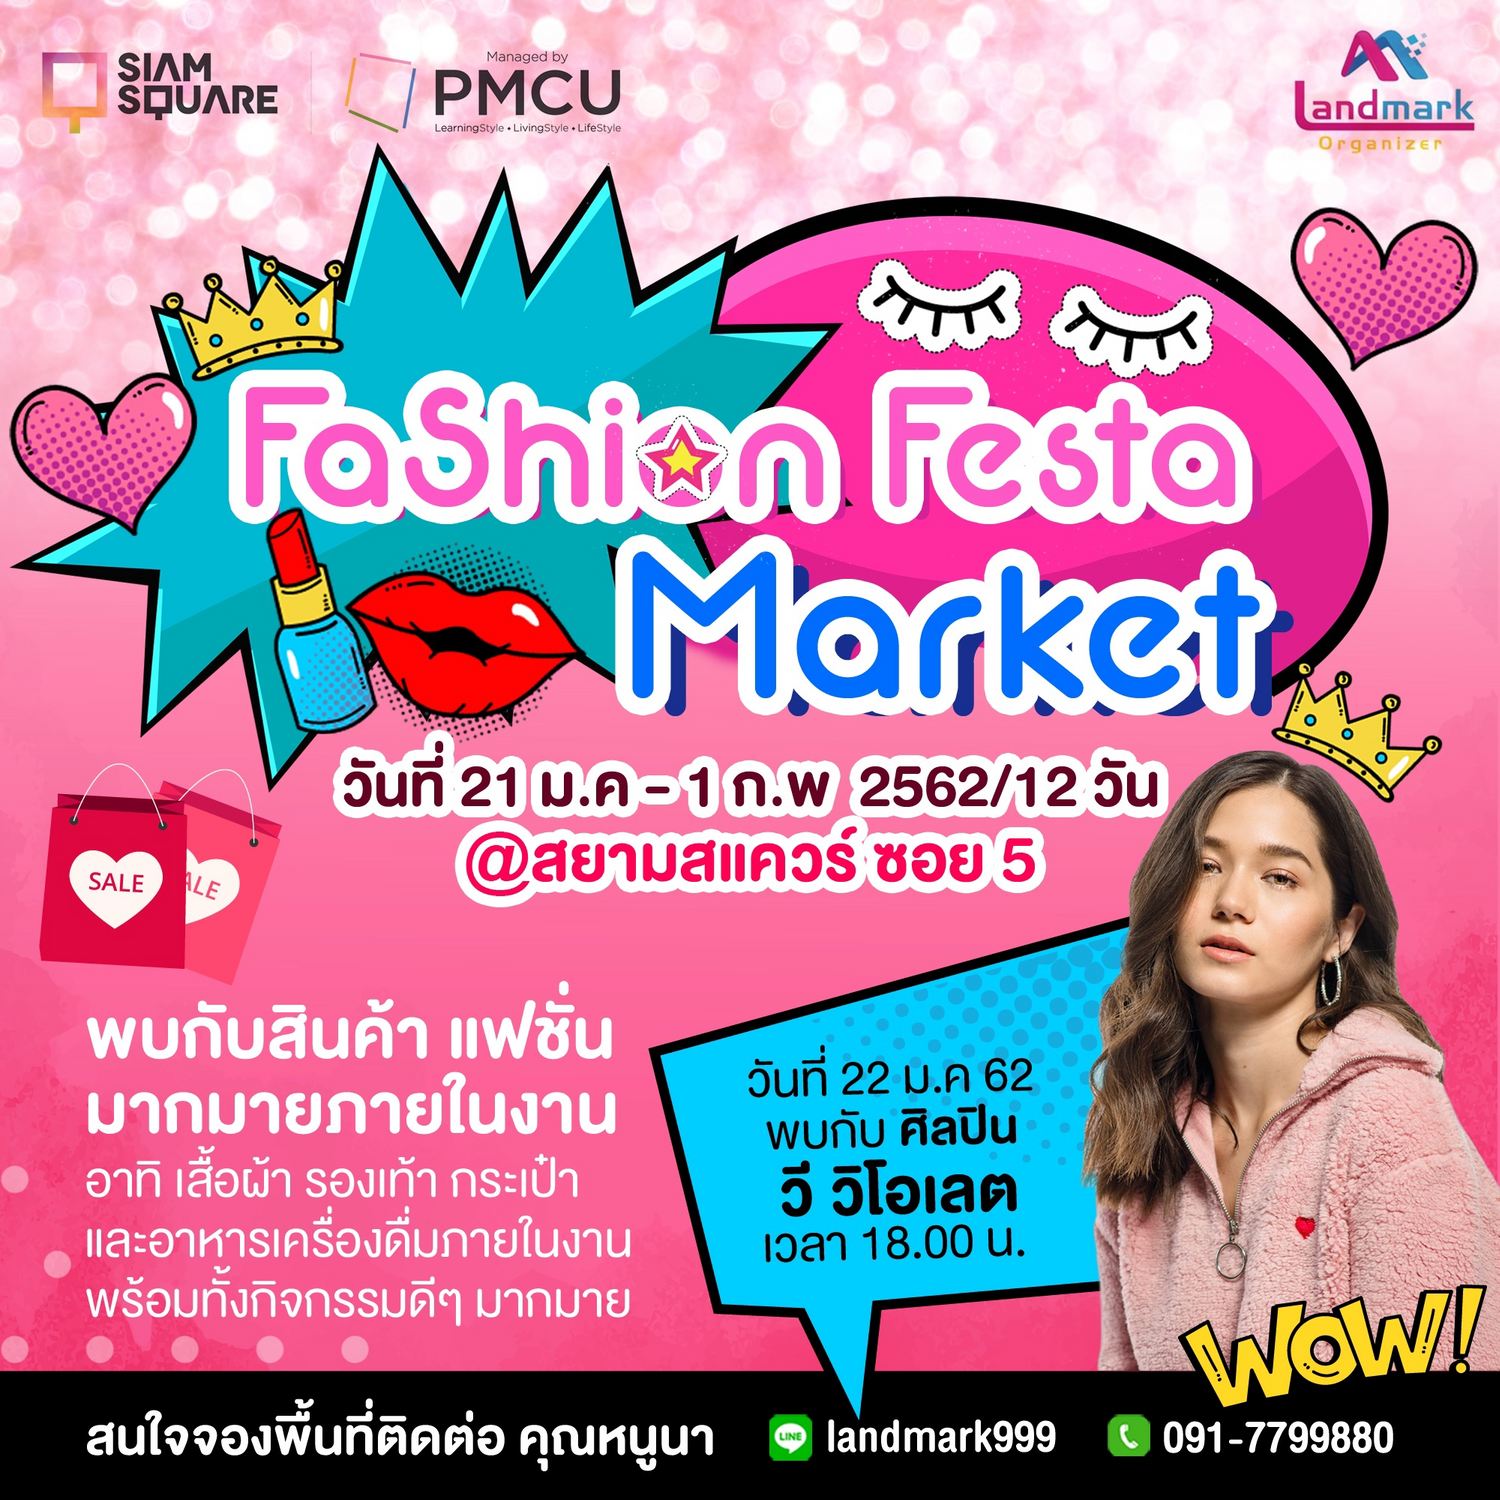 Fashion Festa Market